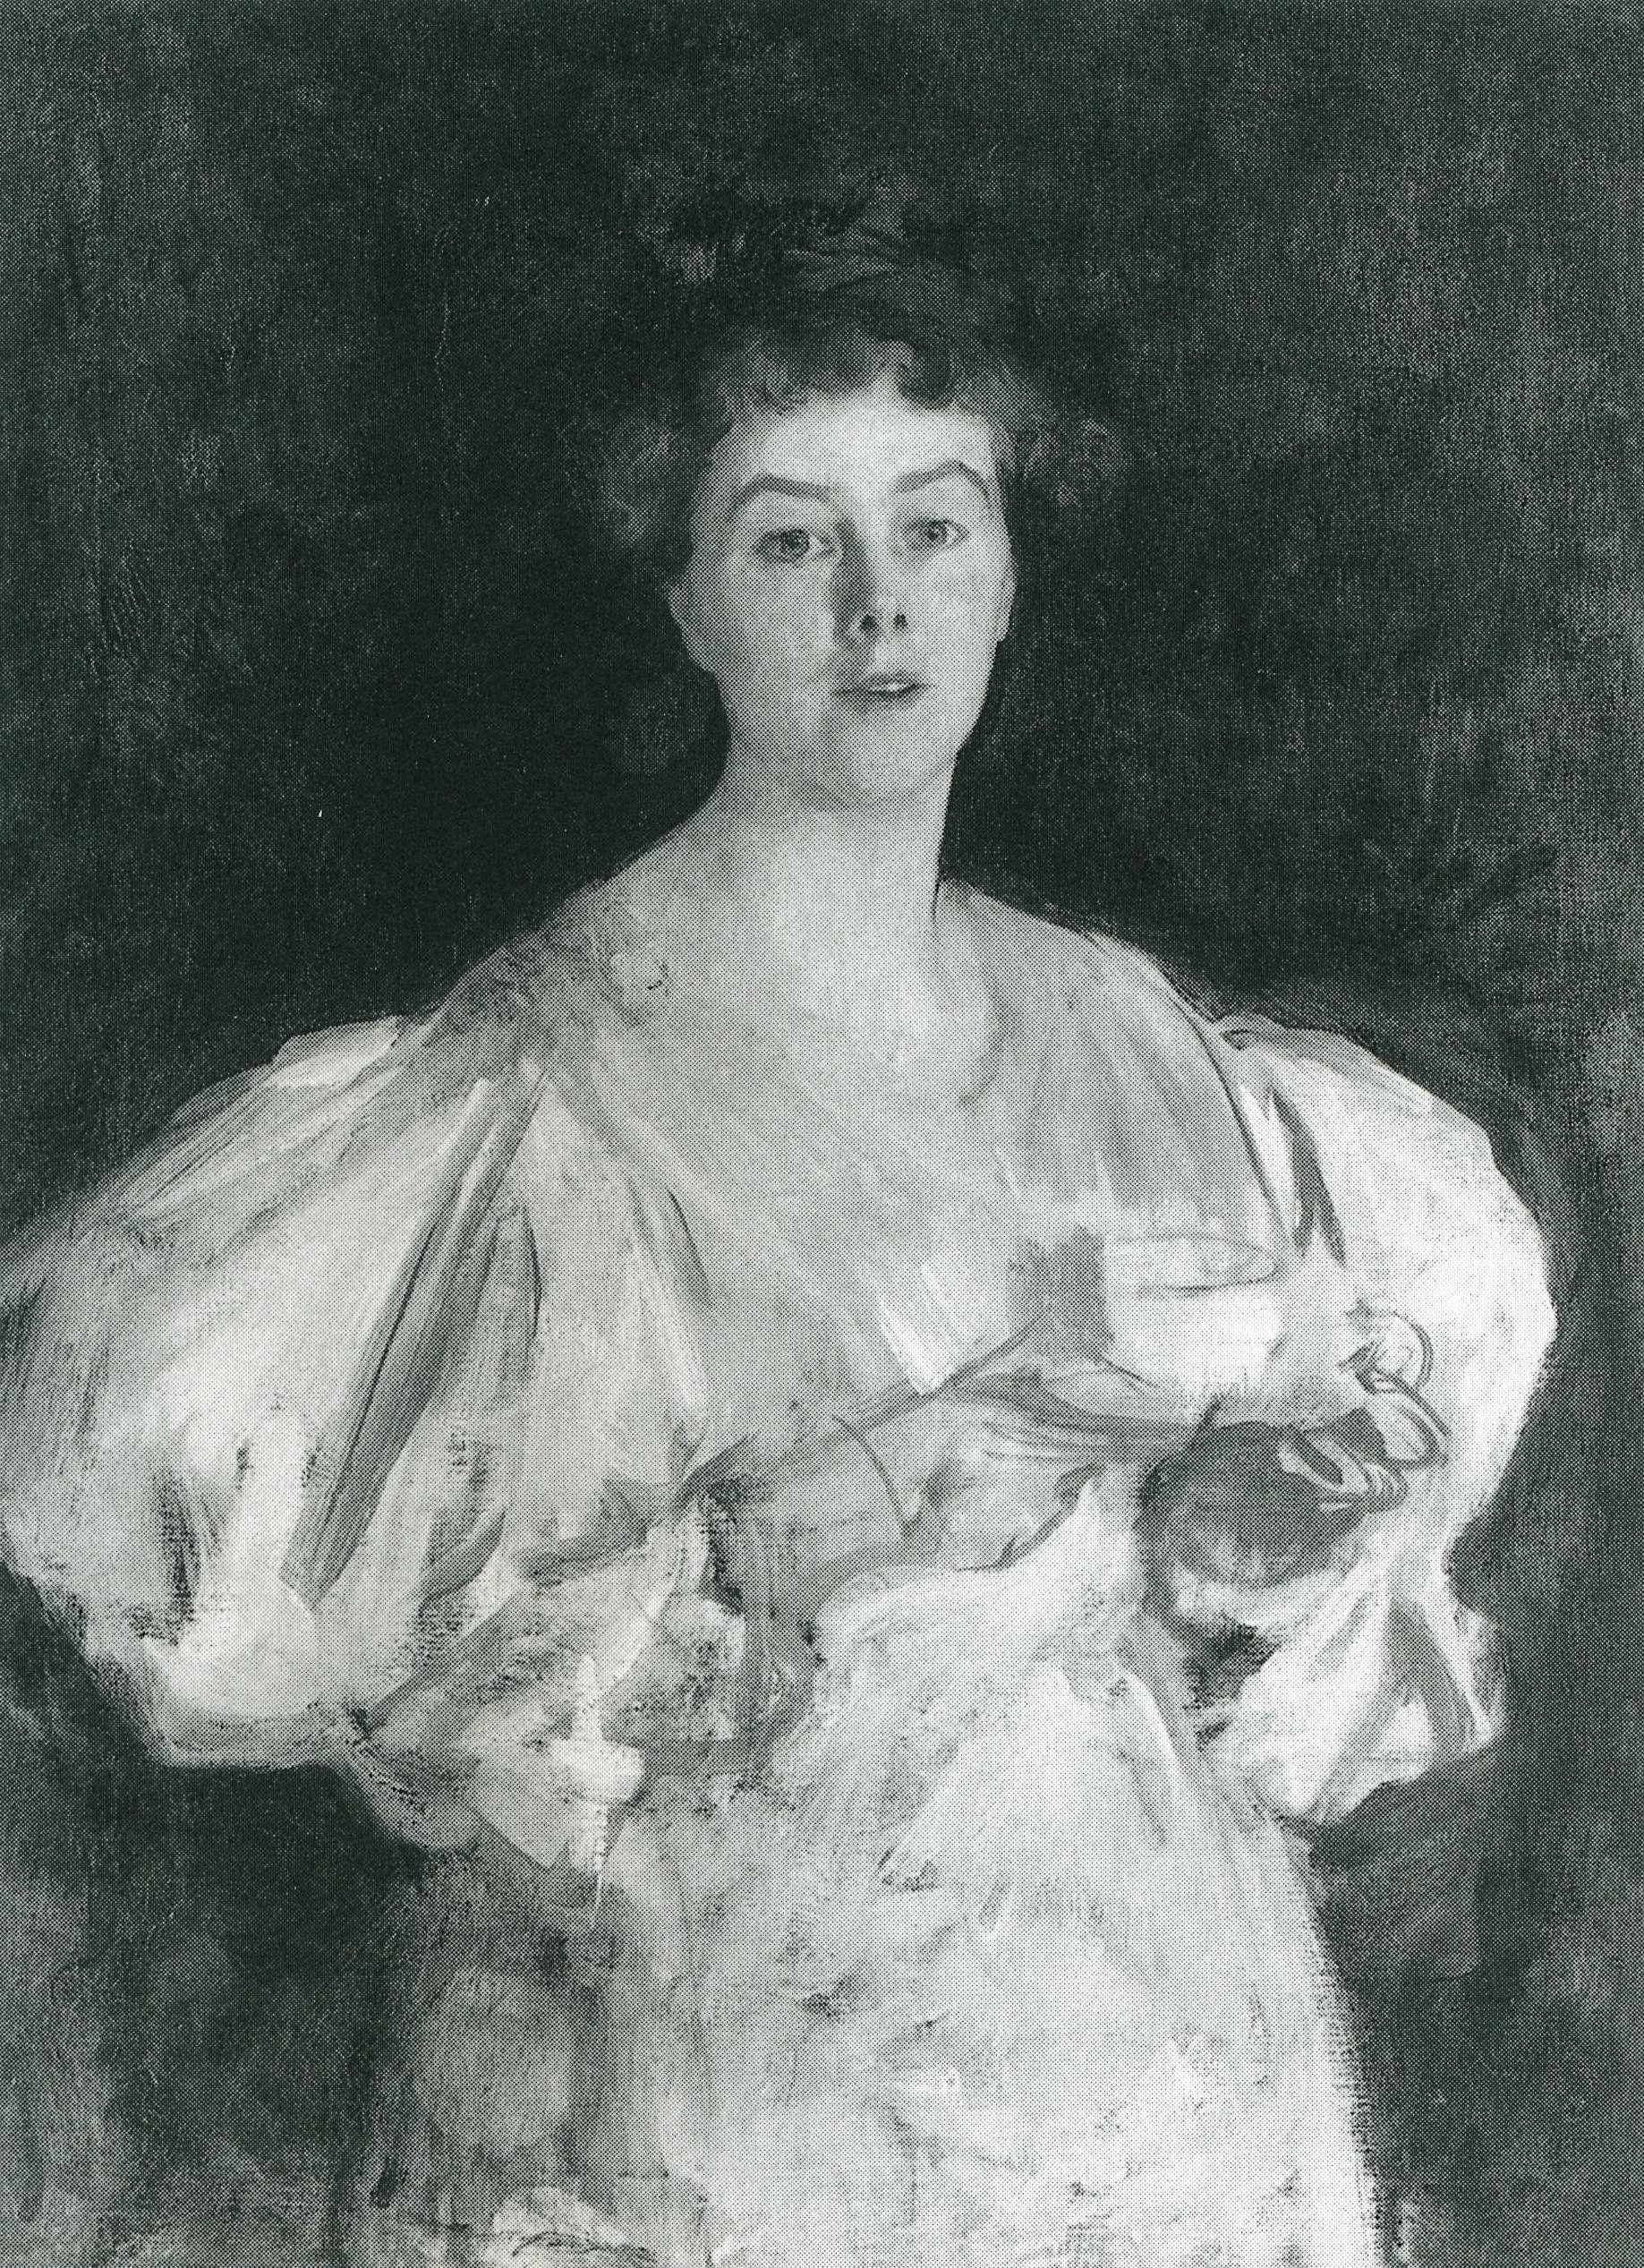 1885, oil on canvas, 98.1 x 71.1 cm